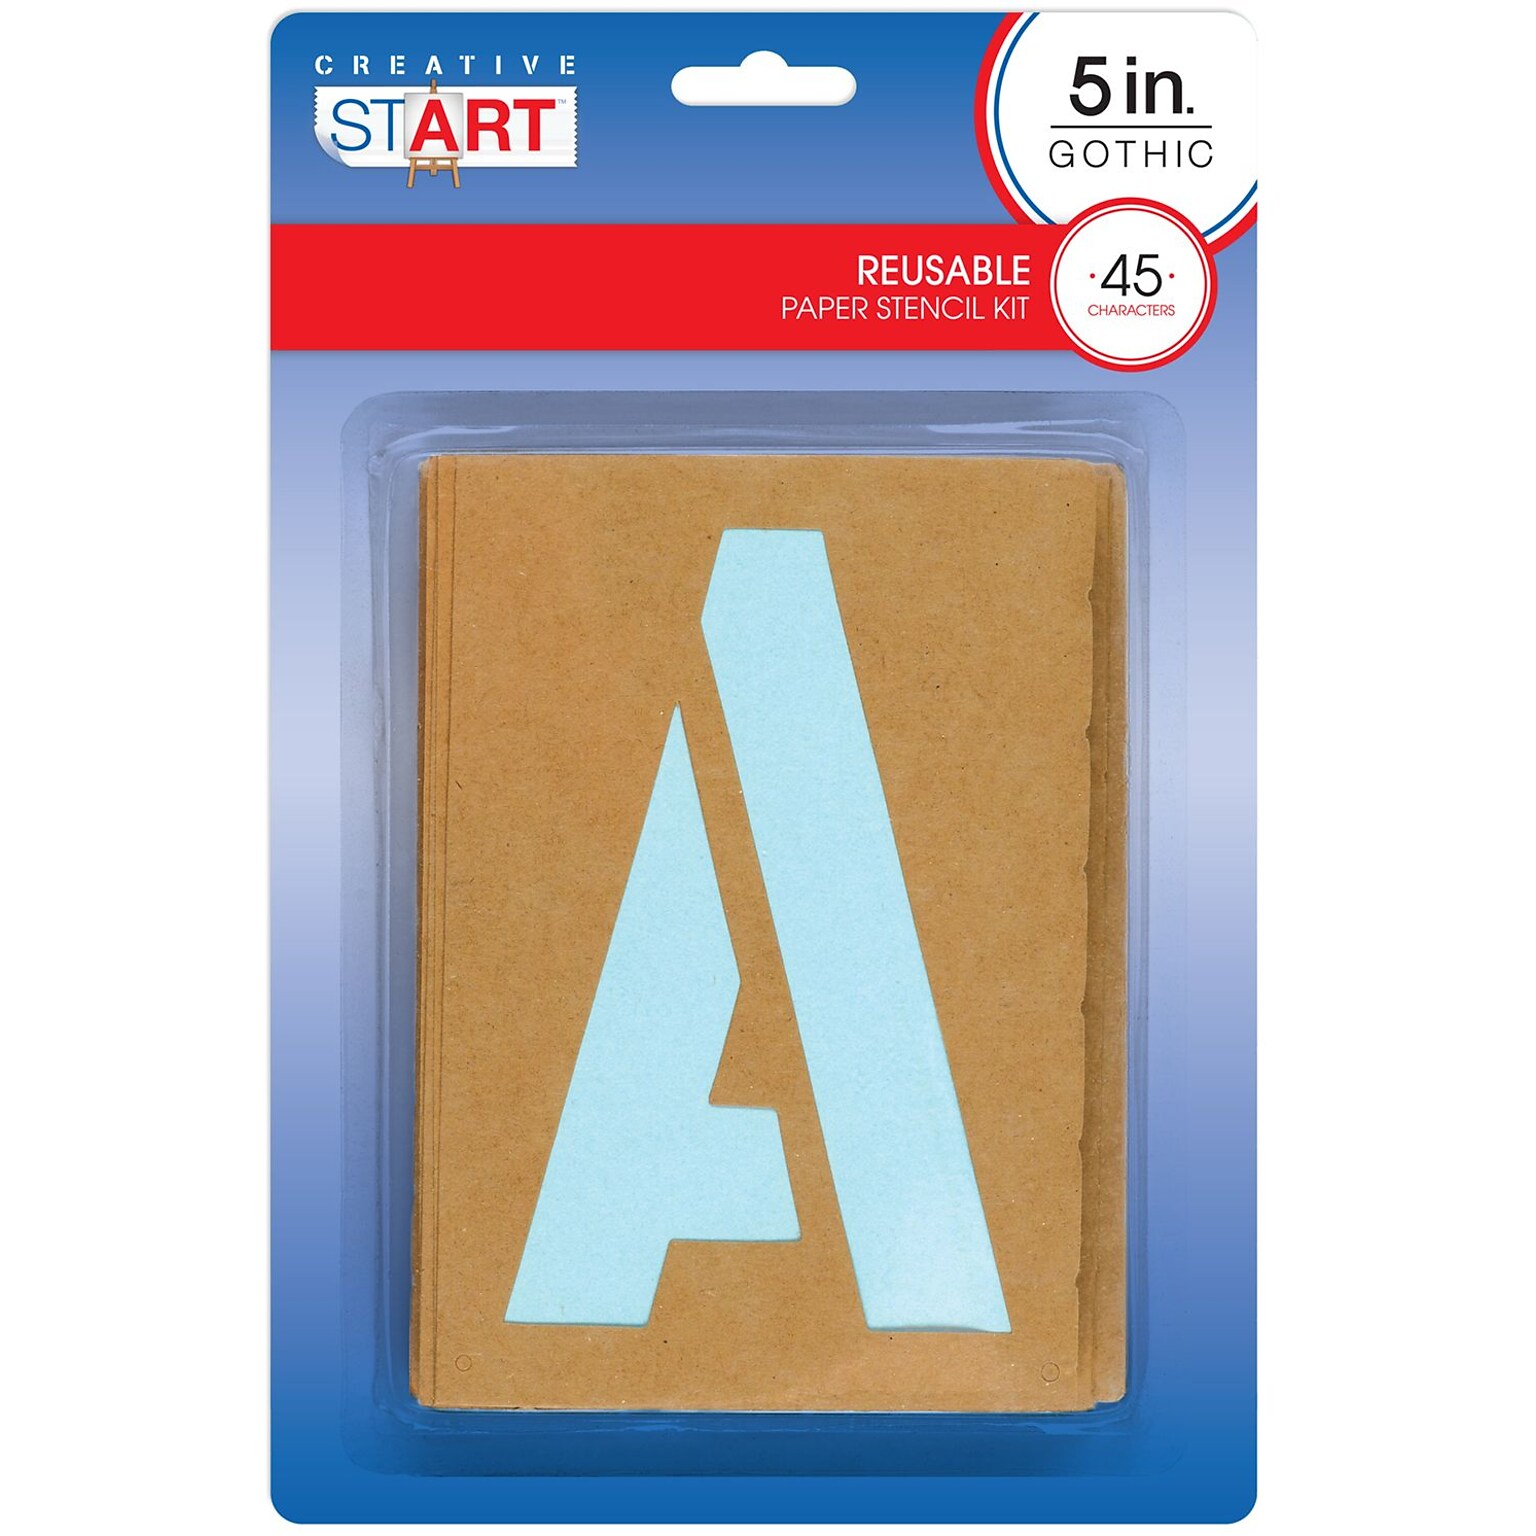 Creative Start Cardboard Stencils 5H 135 Count, 3 Pack (098164PK3)